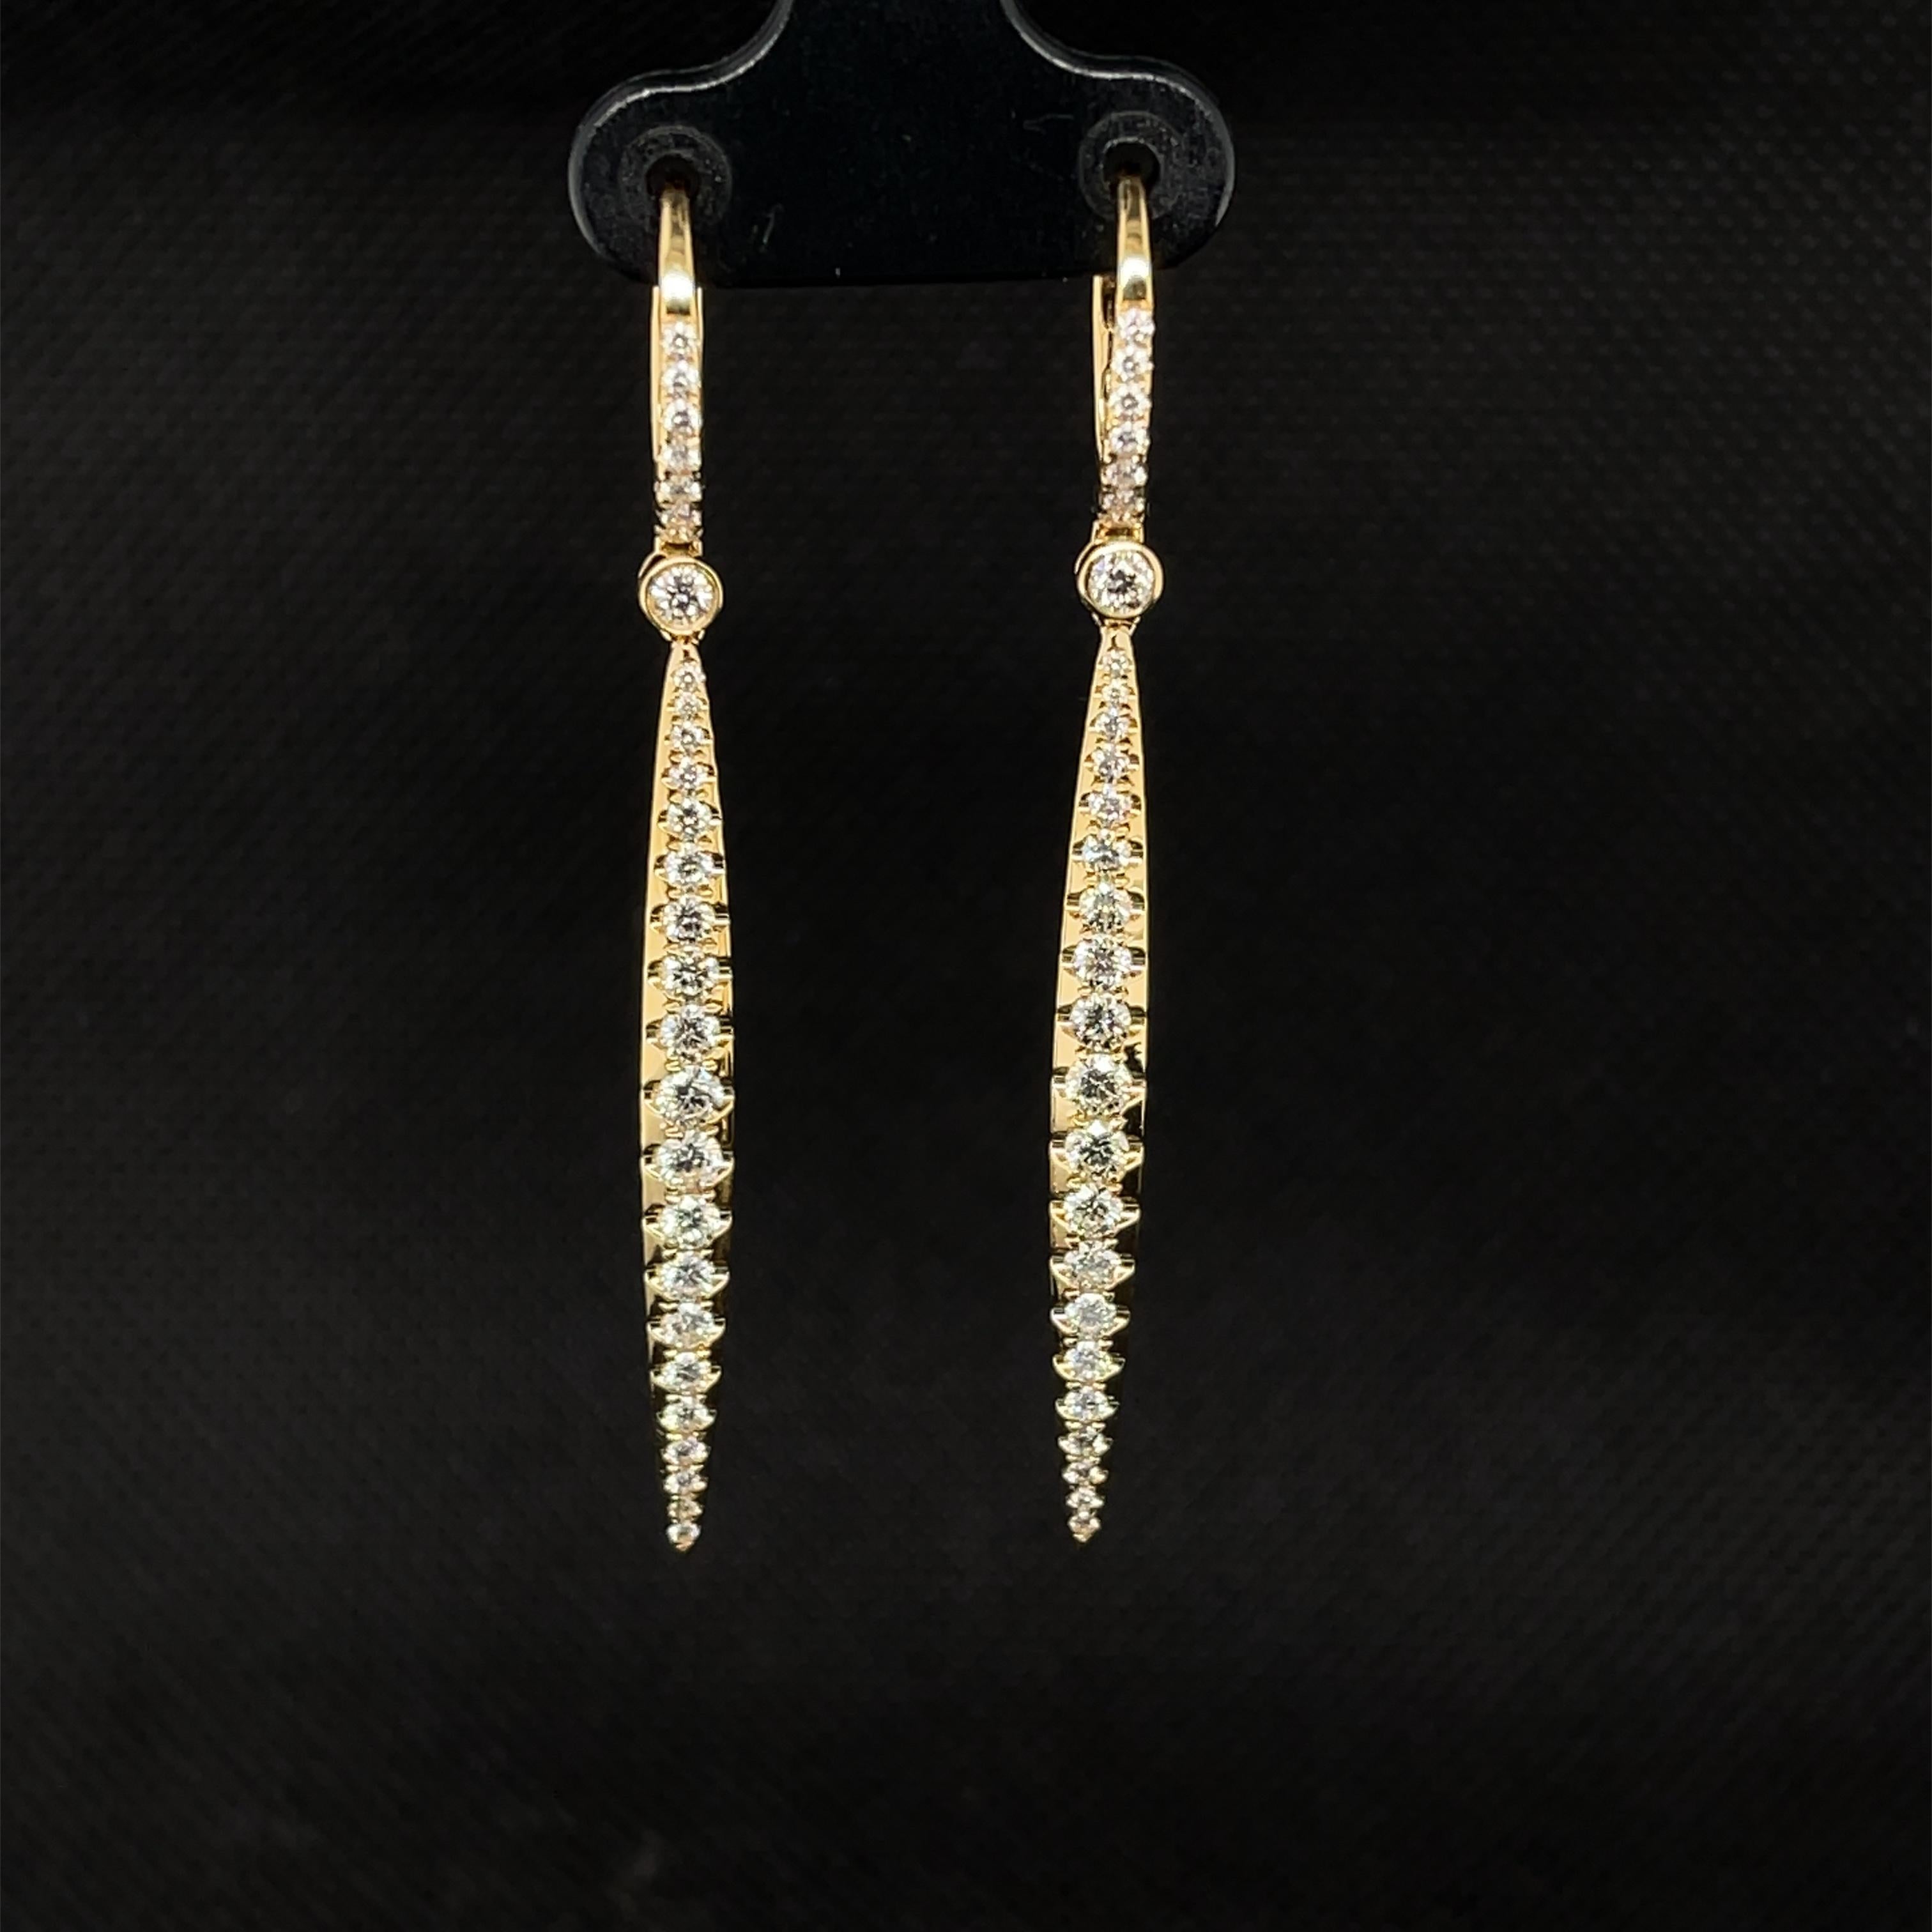 xp c gold earrings price